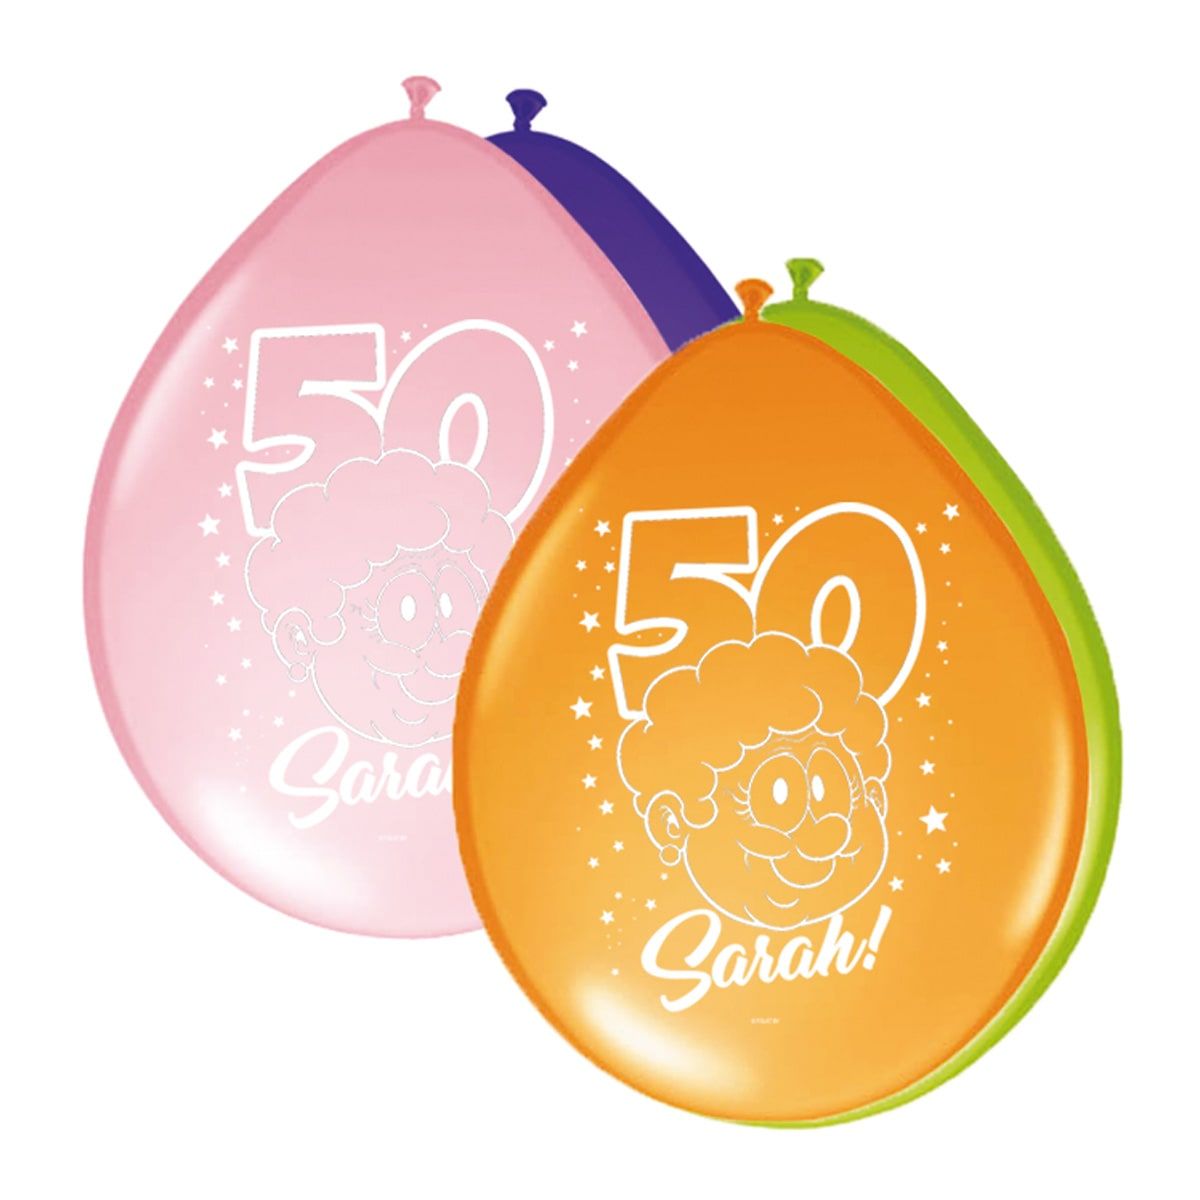 Sarah 50 jaar gekleurde ballonnen 8 stuks